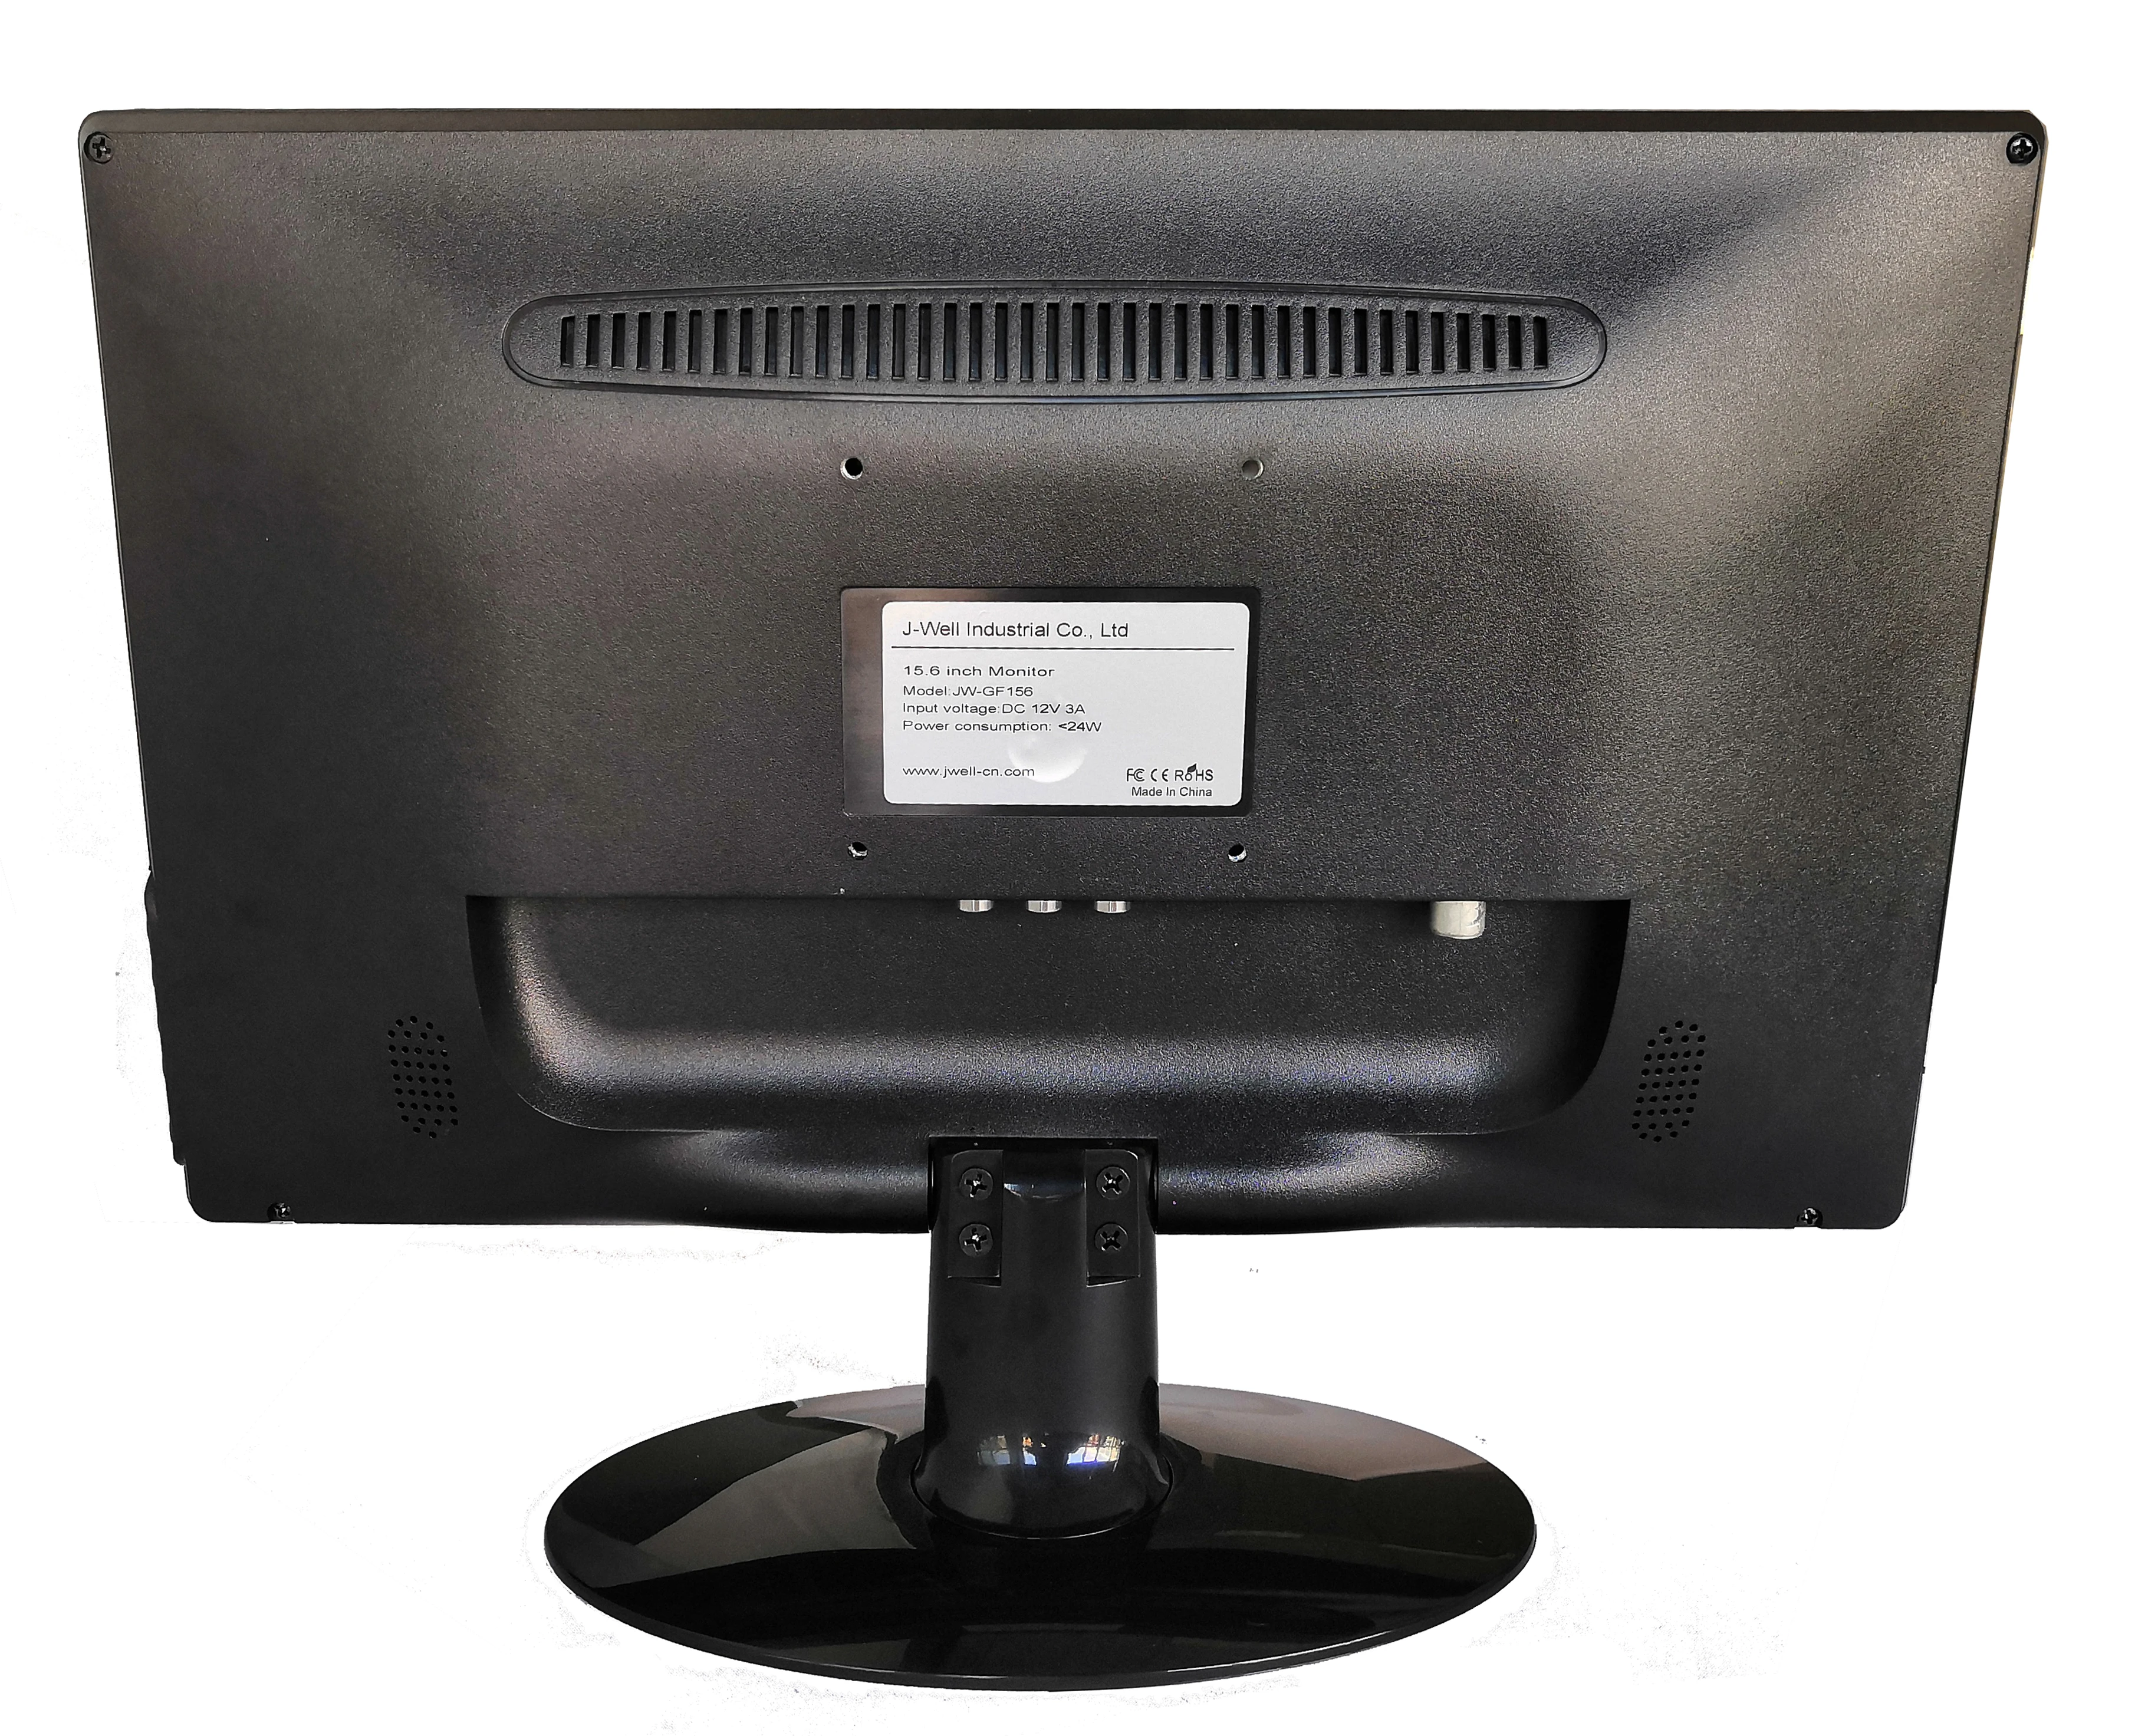 cheap 15.6" led lcd monitor with dvi vga tv-out hdmi